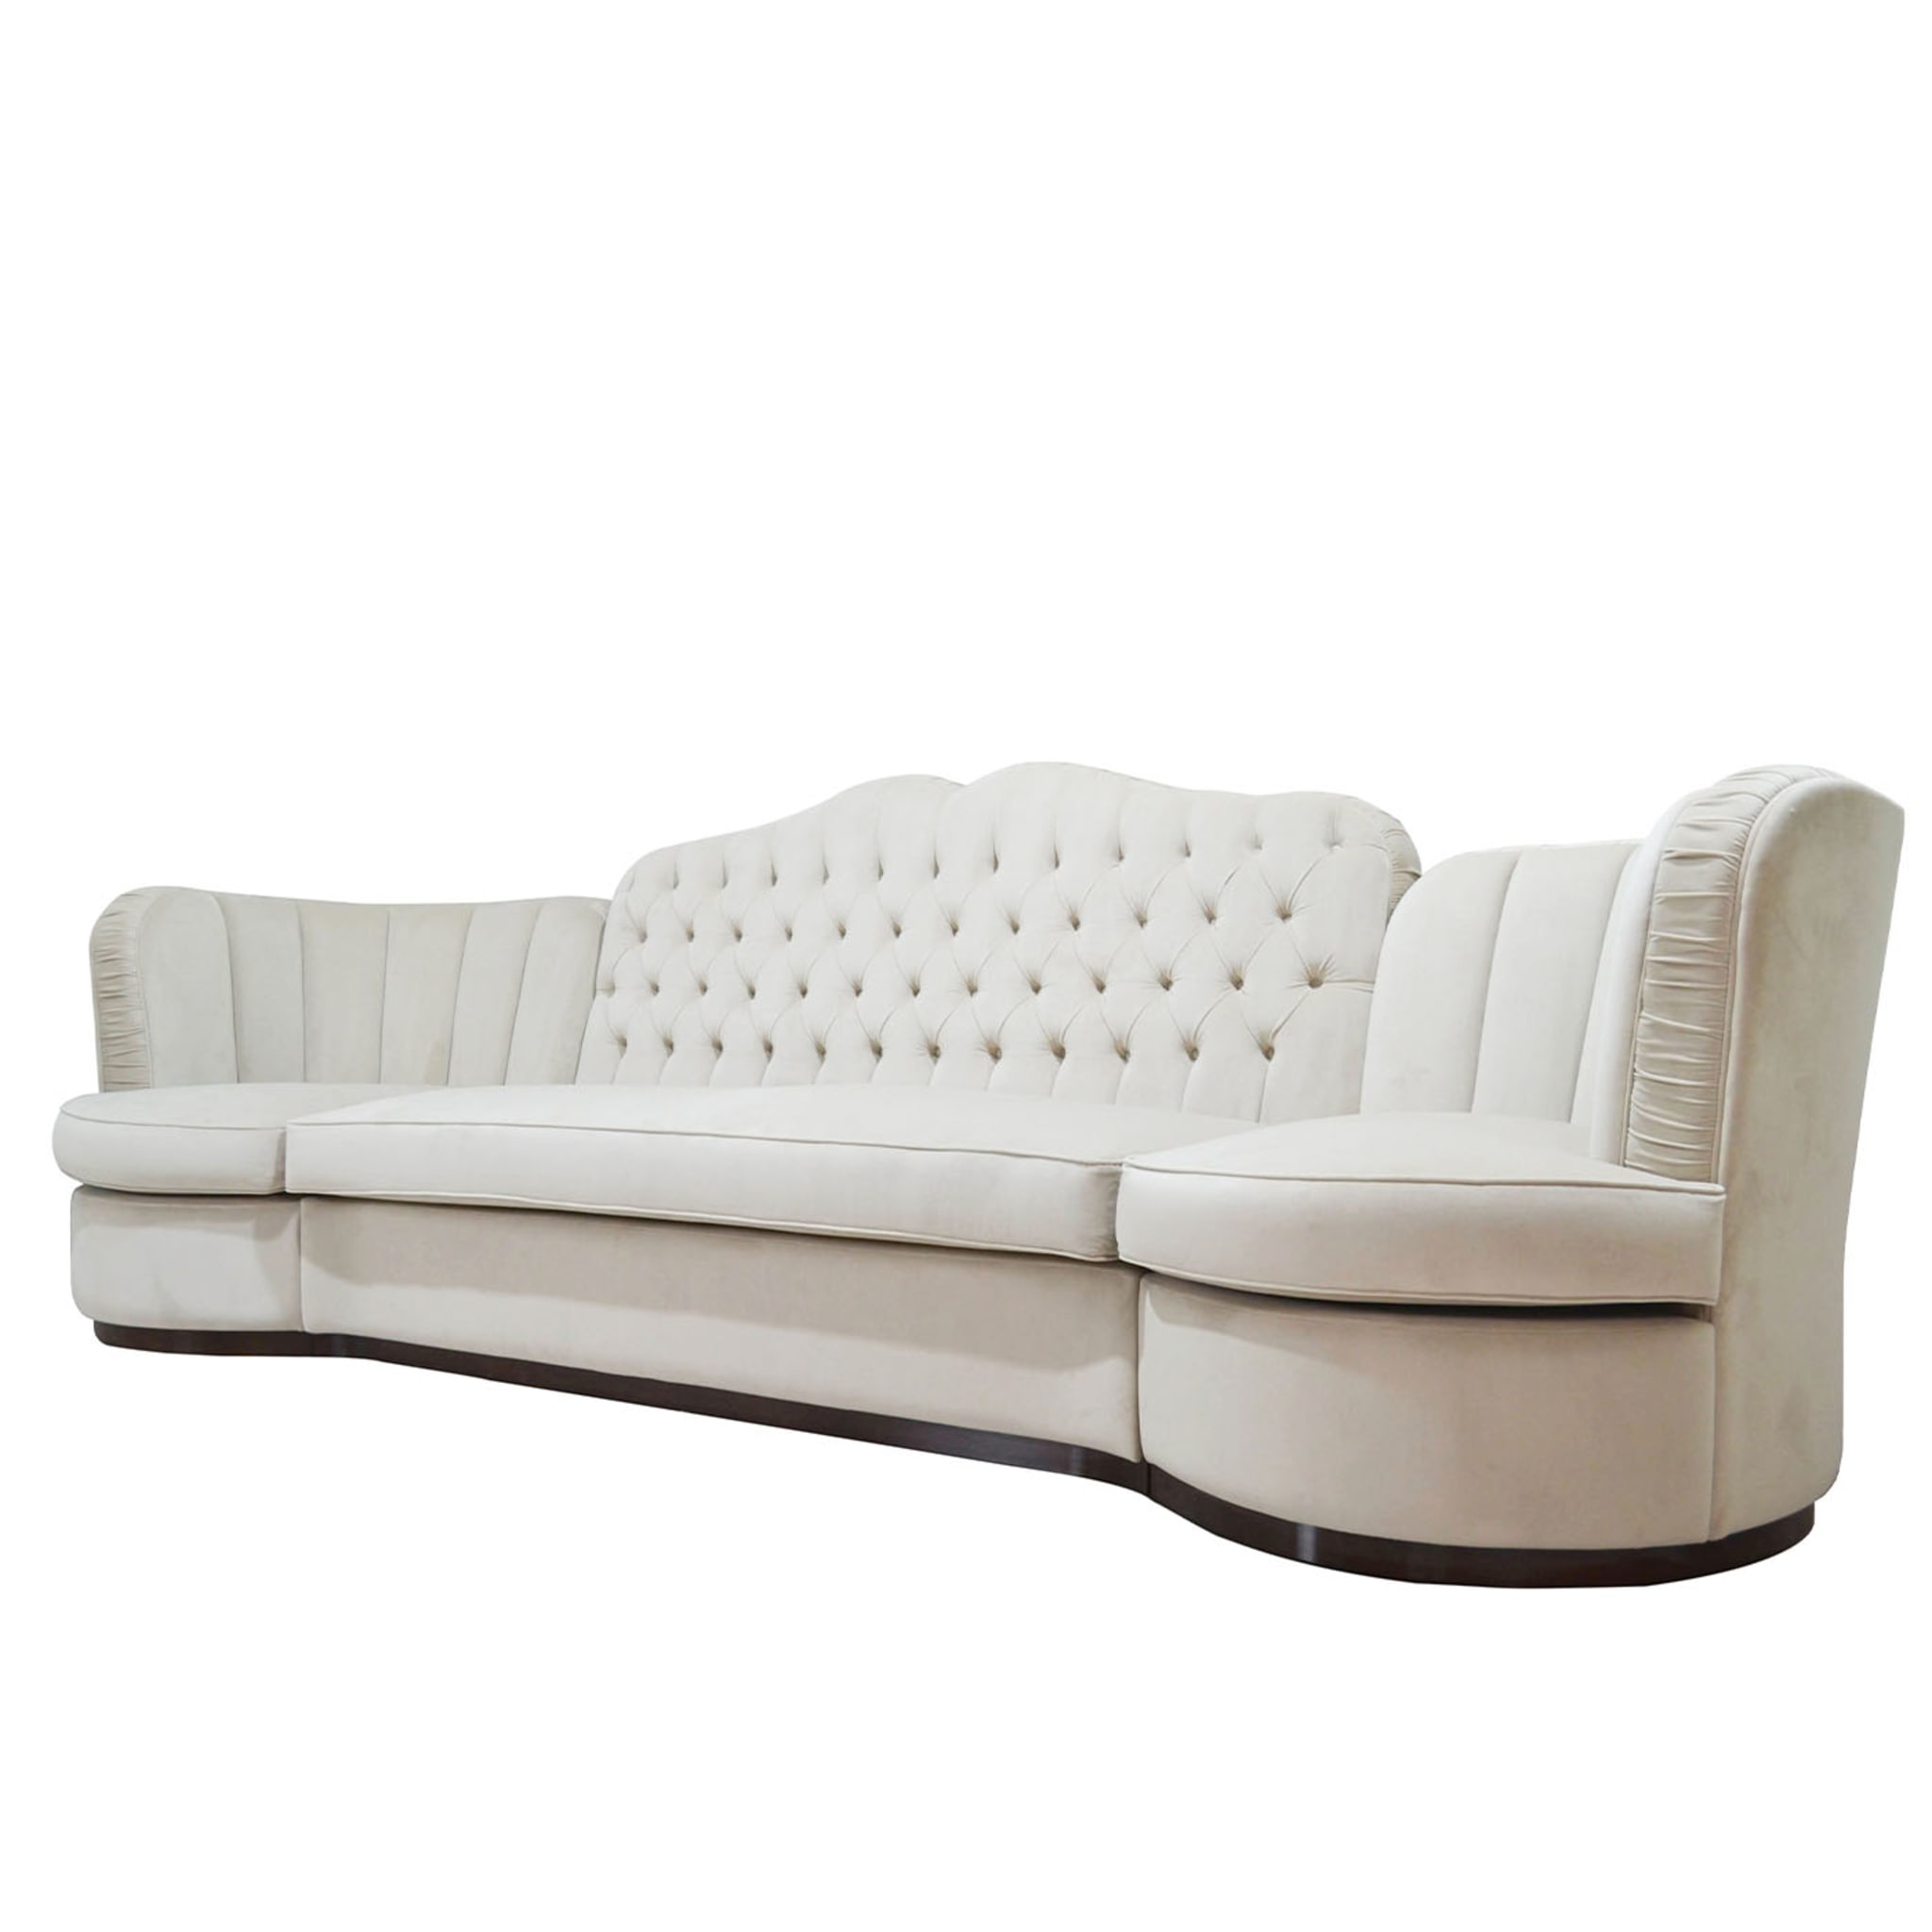 Italian Curved Modular Classic Sofa in Beige Velvet - Alternative view 1